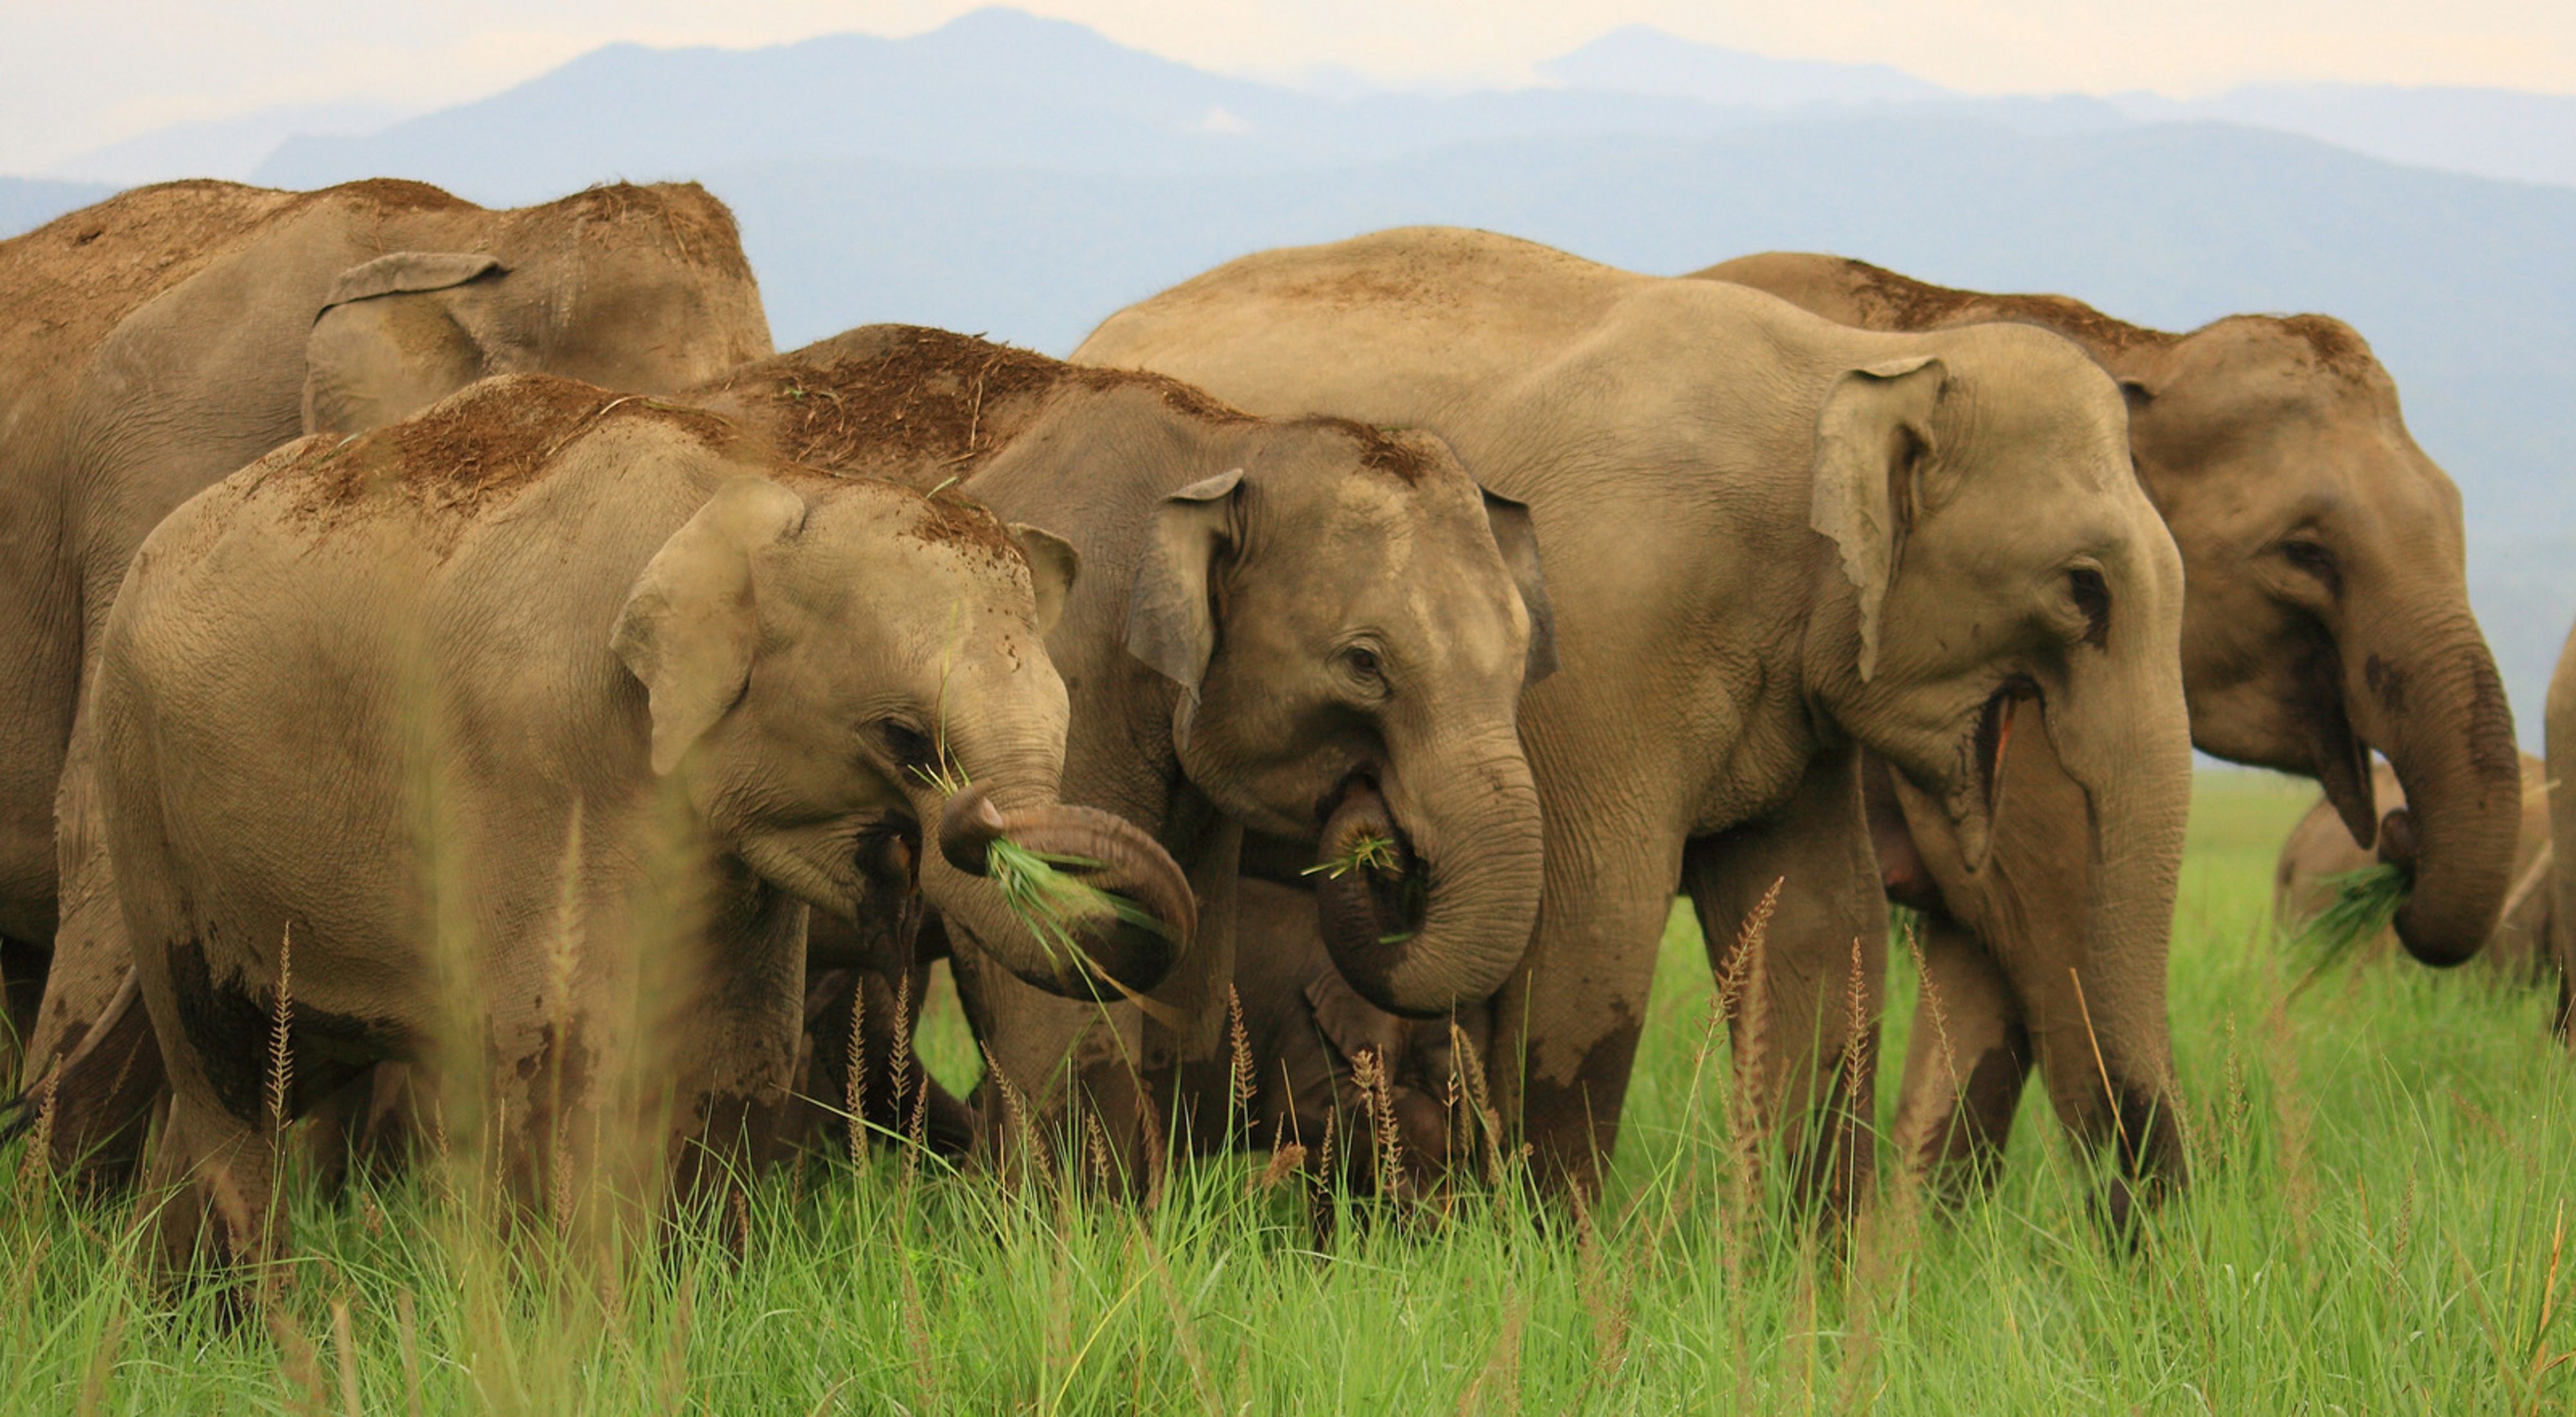 Herd of elephants walking together